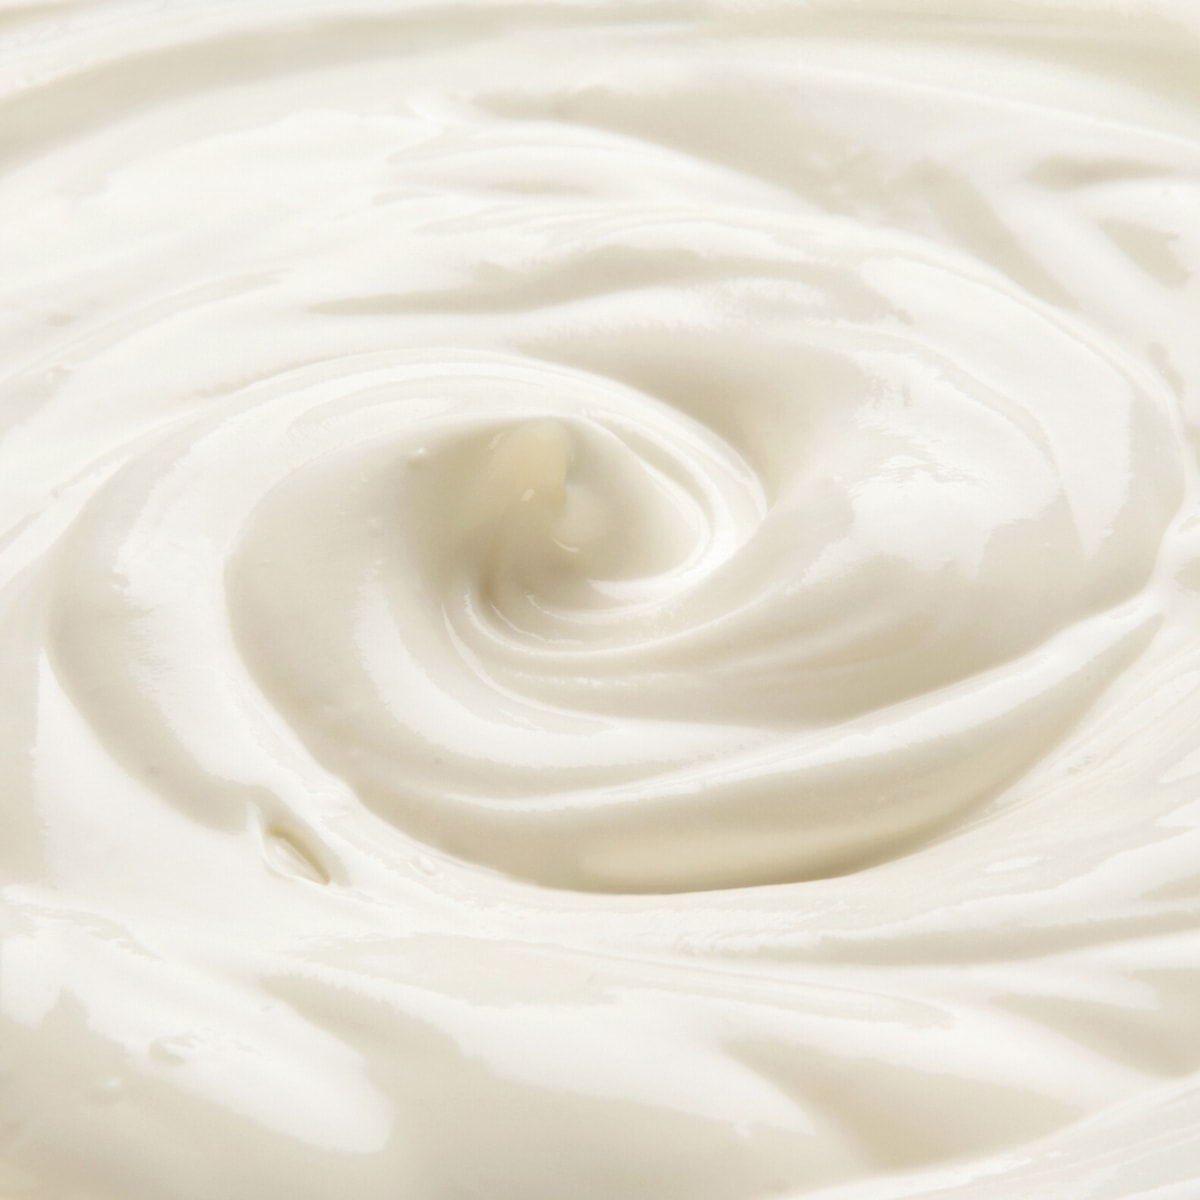 A close shot of white yogurt.